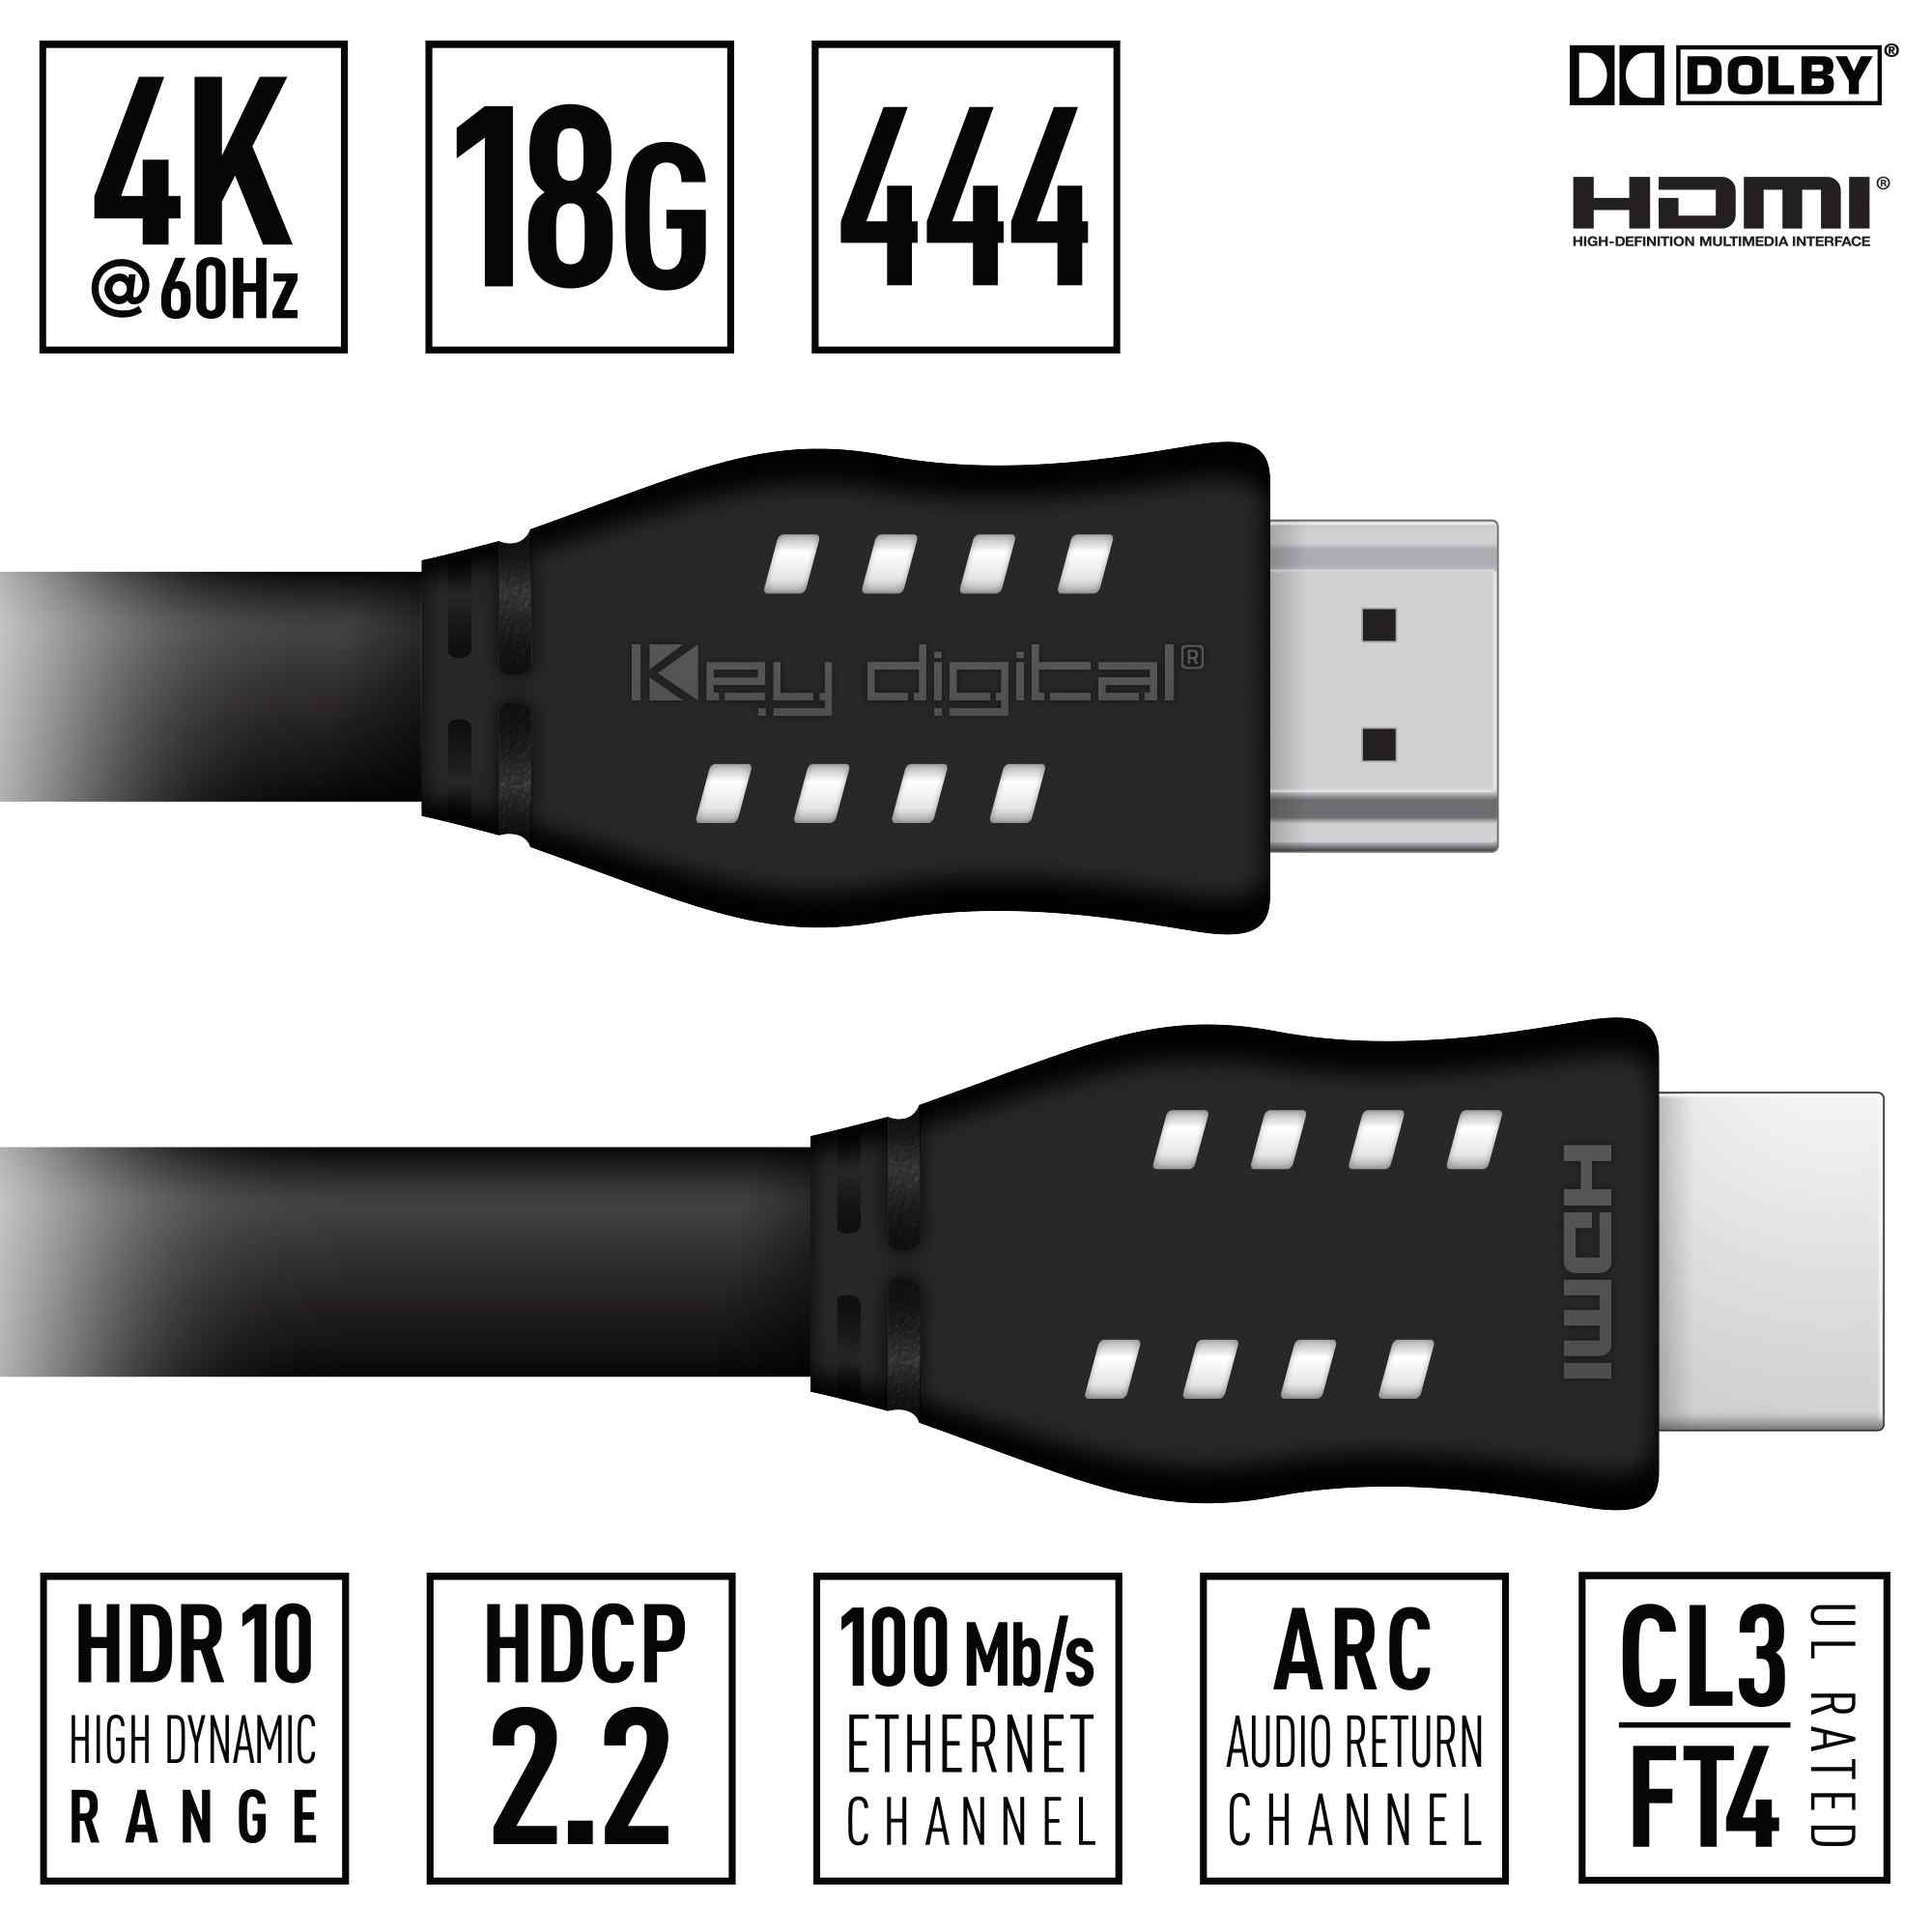 Thumbnail of Key Digital 20 hdmi cable Product Image